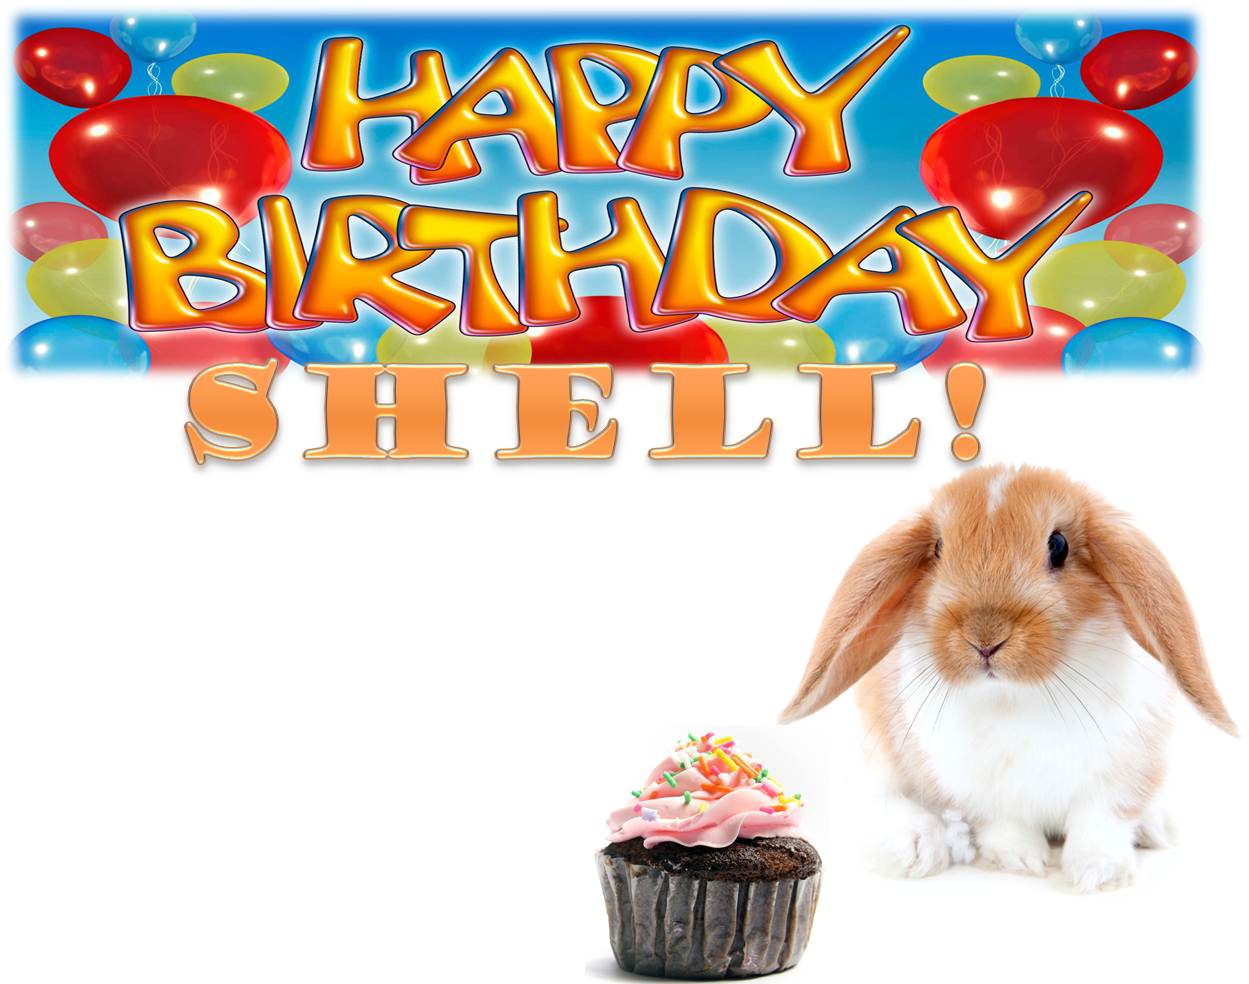 Happy Birthday, Shell! Shell+birthday+picture